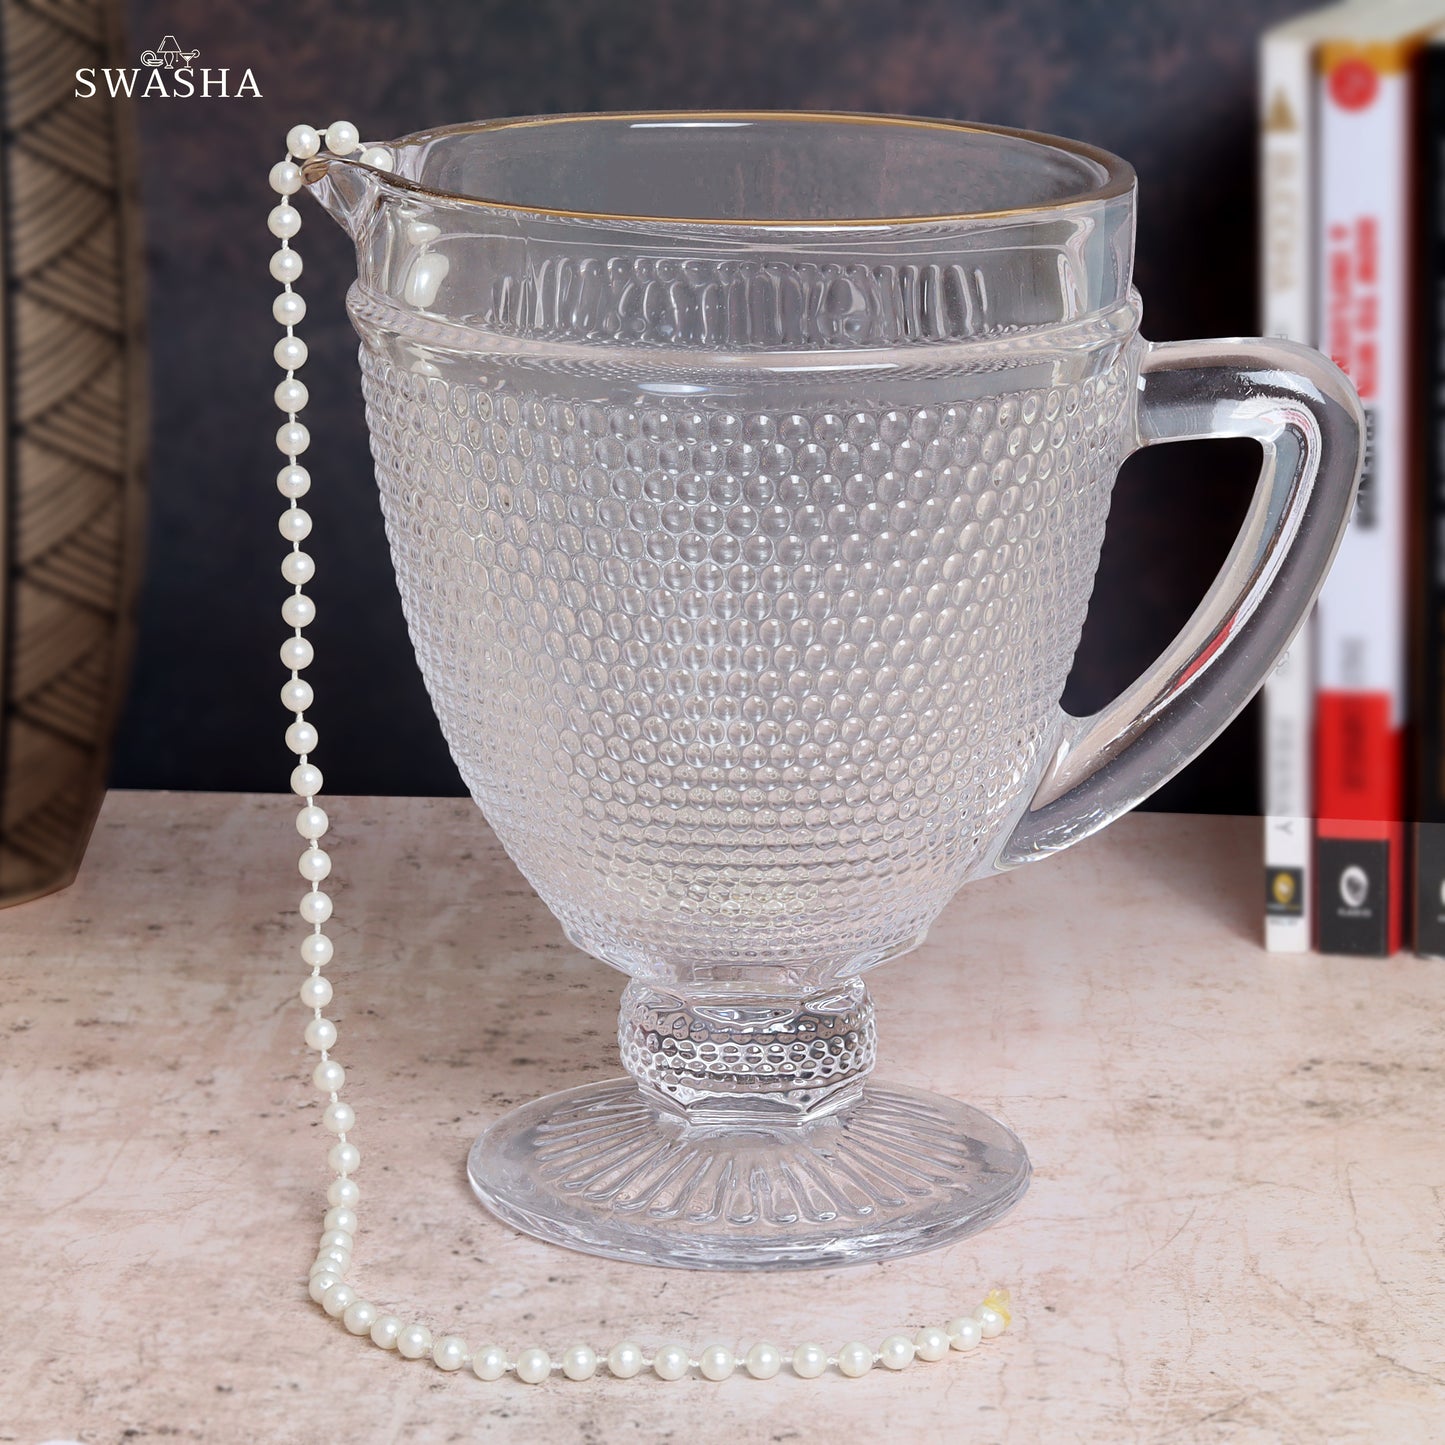 Glassware set with jug  - elegant and functional design